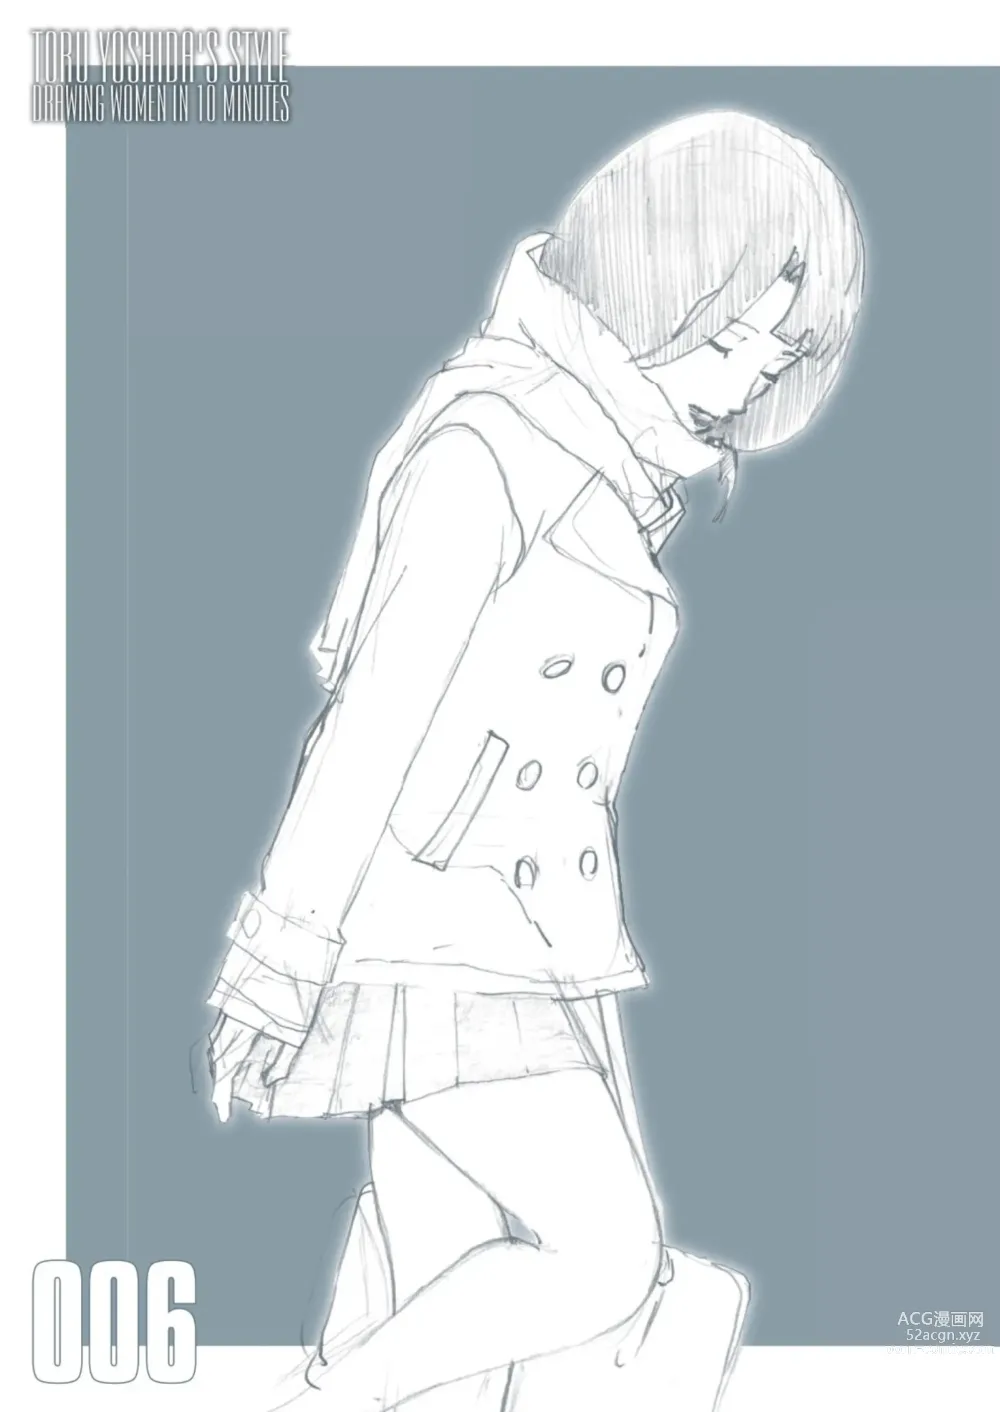 Page 8 of manga Toru Yoshida Tips for drawing women in 10 minutes 270 Uniforms